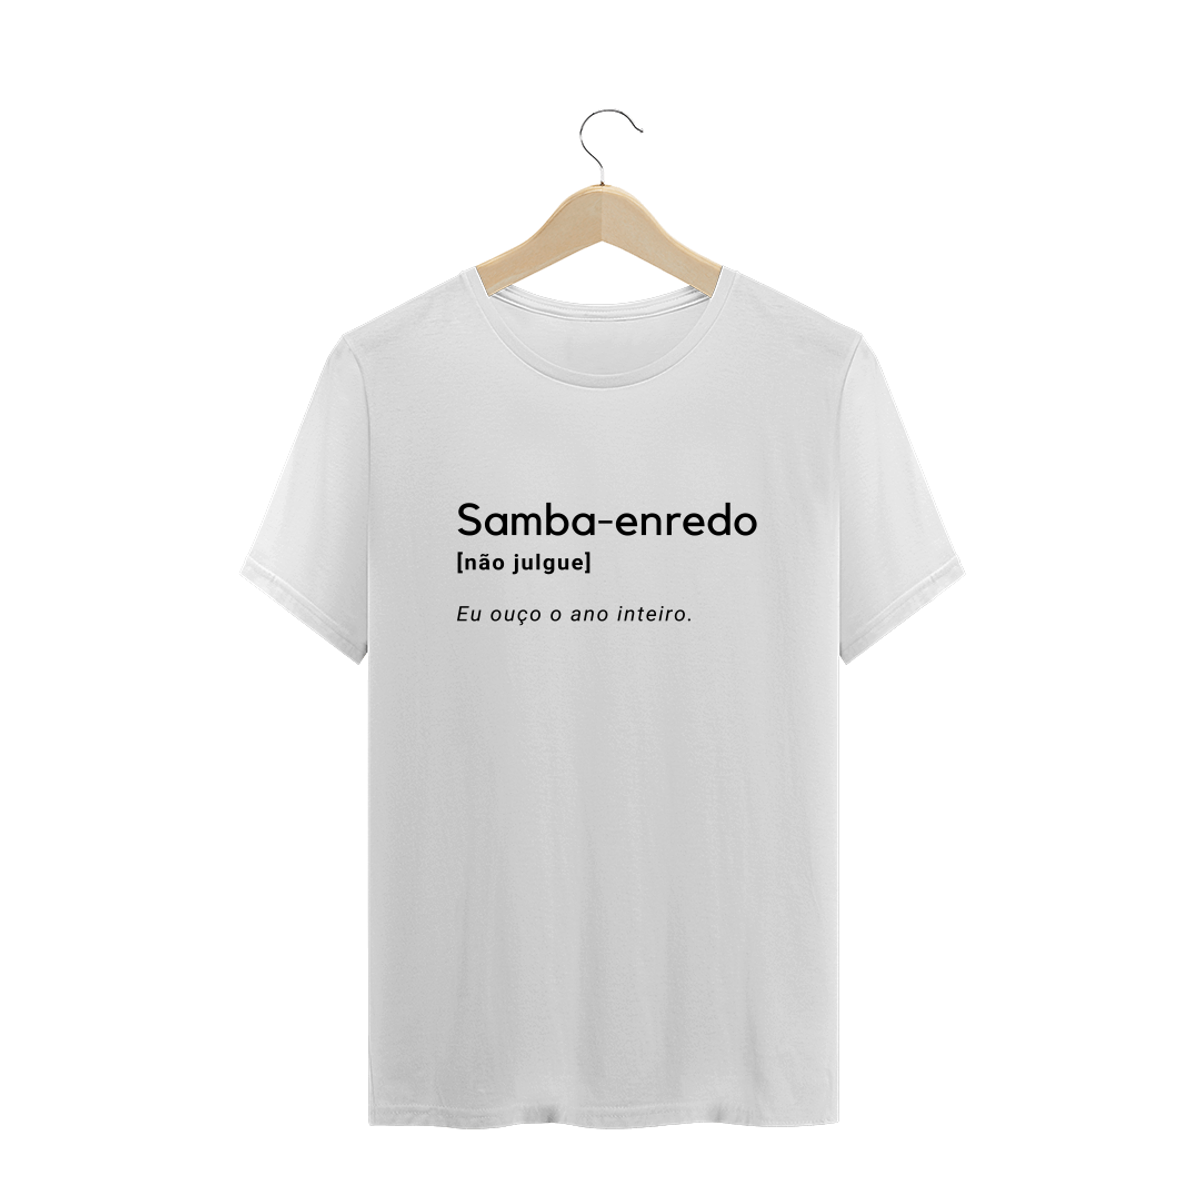 Nome do produto: Camiseta Samba-enredo